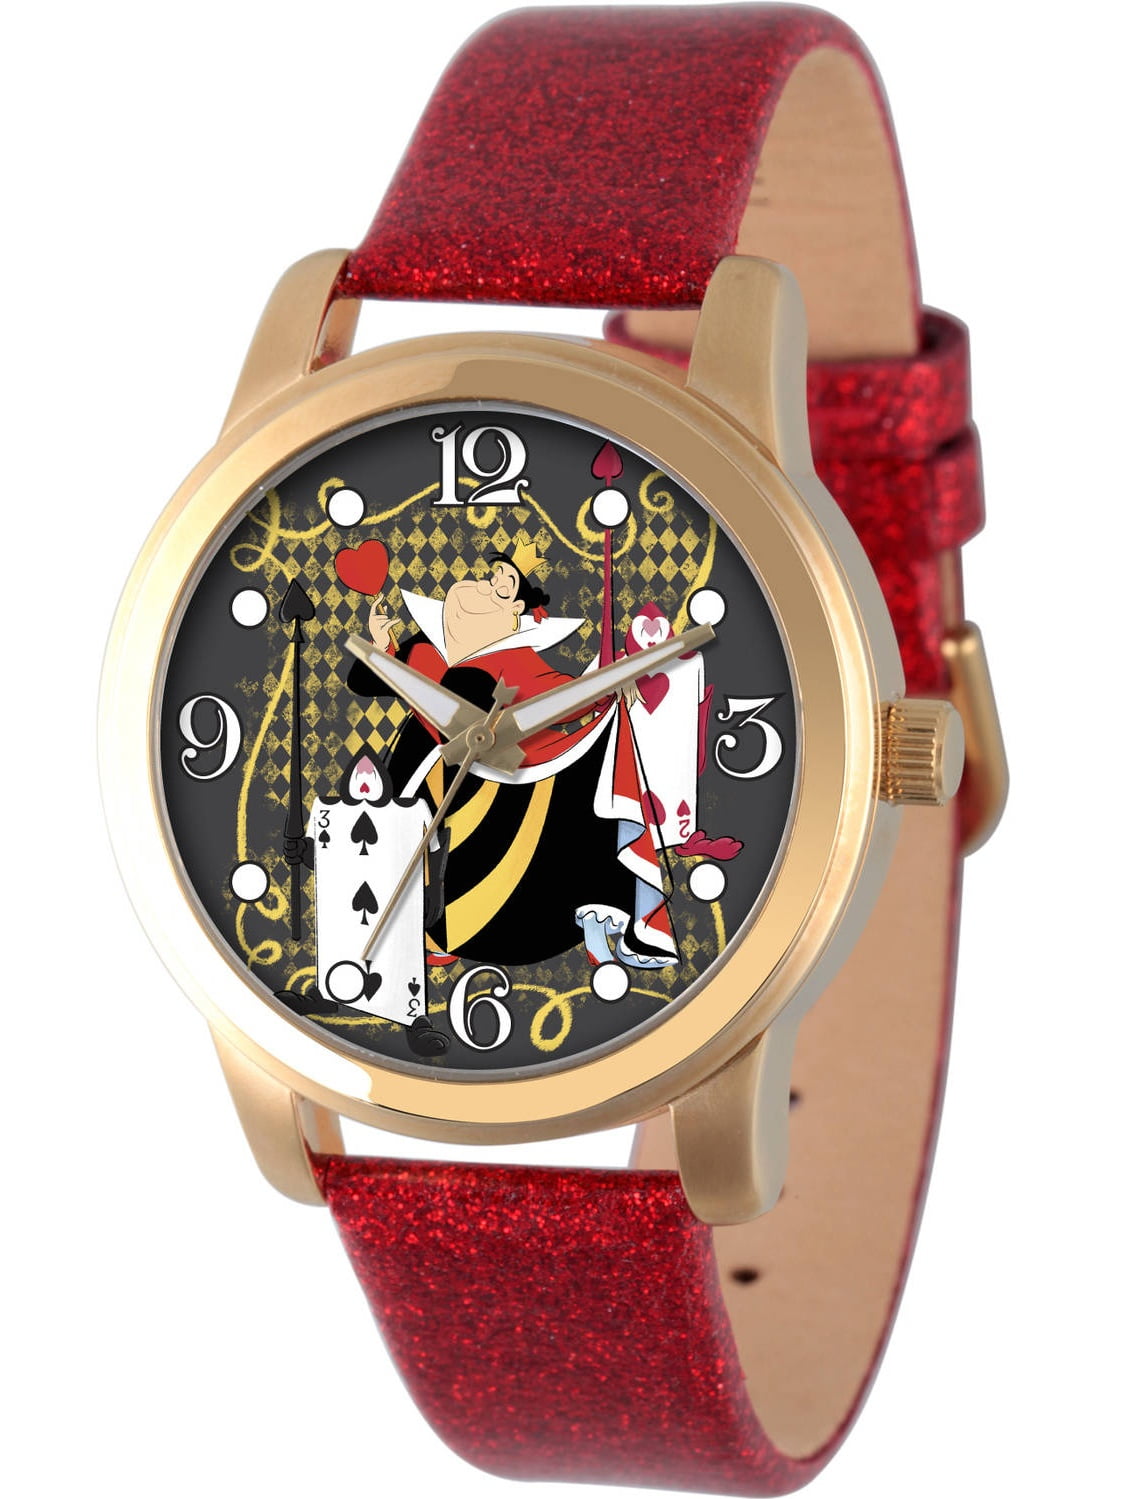 Alice in Wonderland Brown Leather Wrist Watch